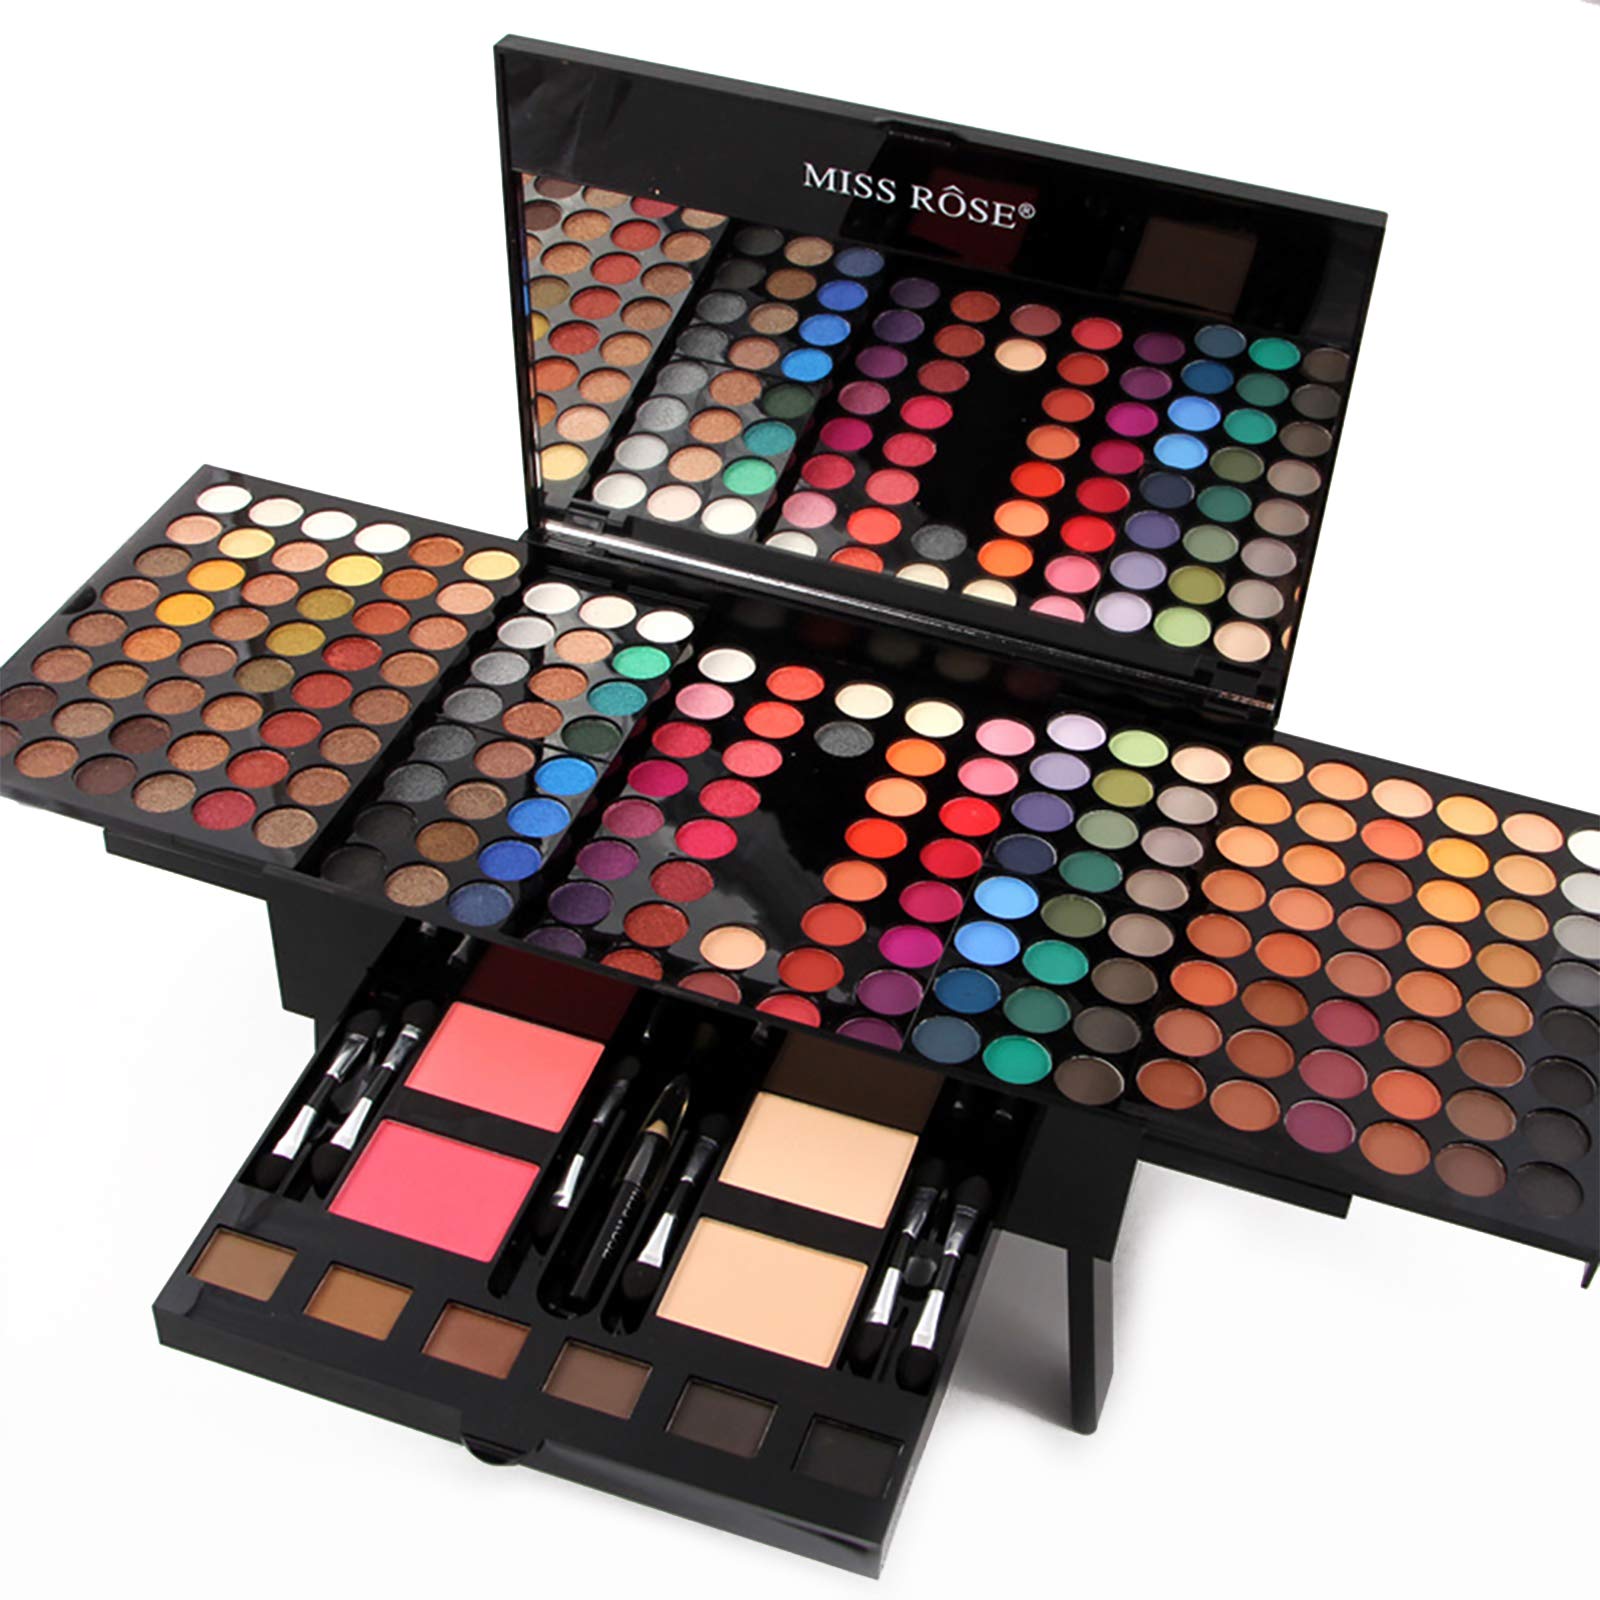 190 Colors Cosmetic Make up Palette Set Kit best reviews - MakeupFull.com